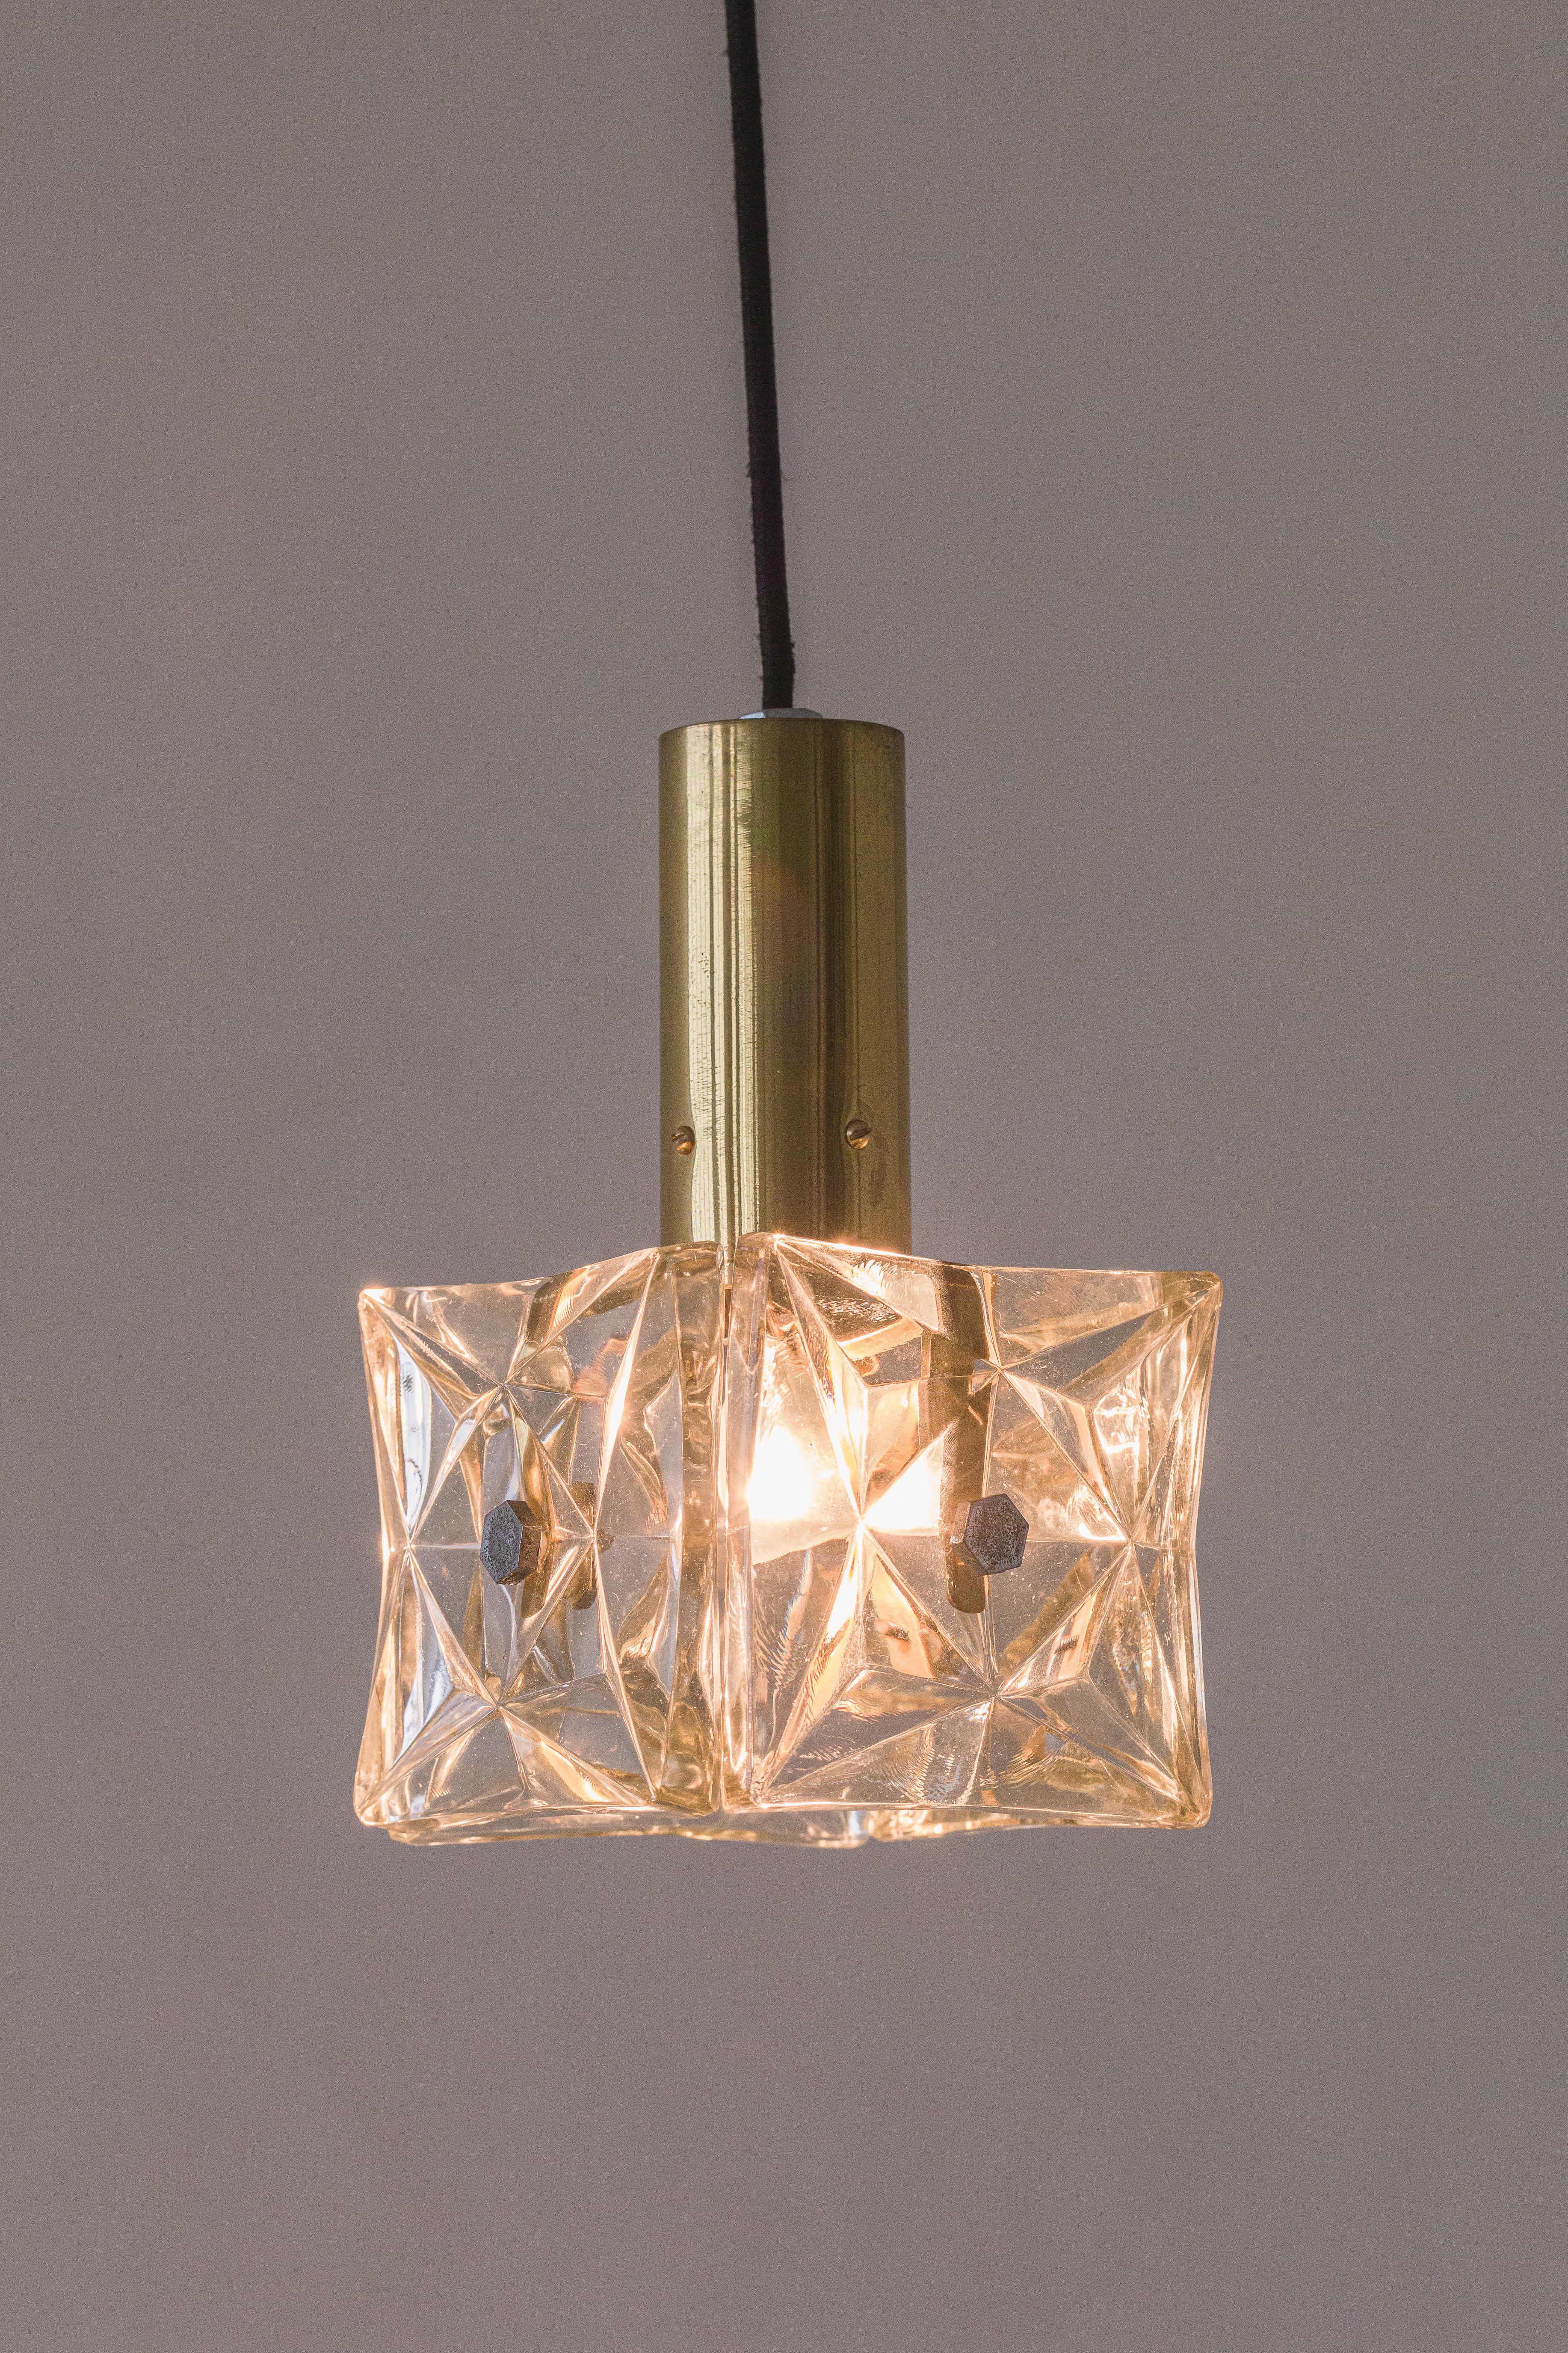 Mid-20th Century Pendant Lamp, Brass and Prismatic Glass, Lustres Pelotas Brazilian Design, 1950s For Sale